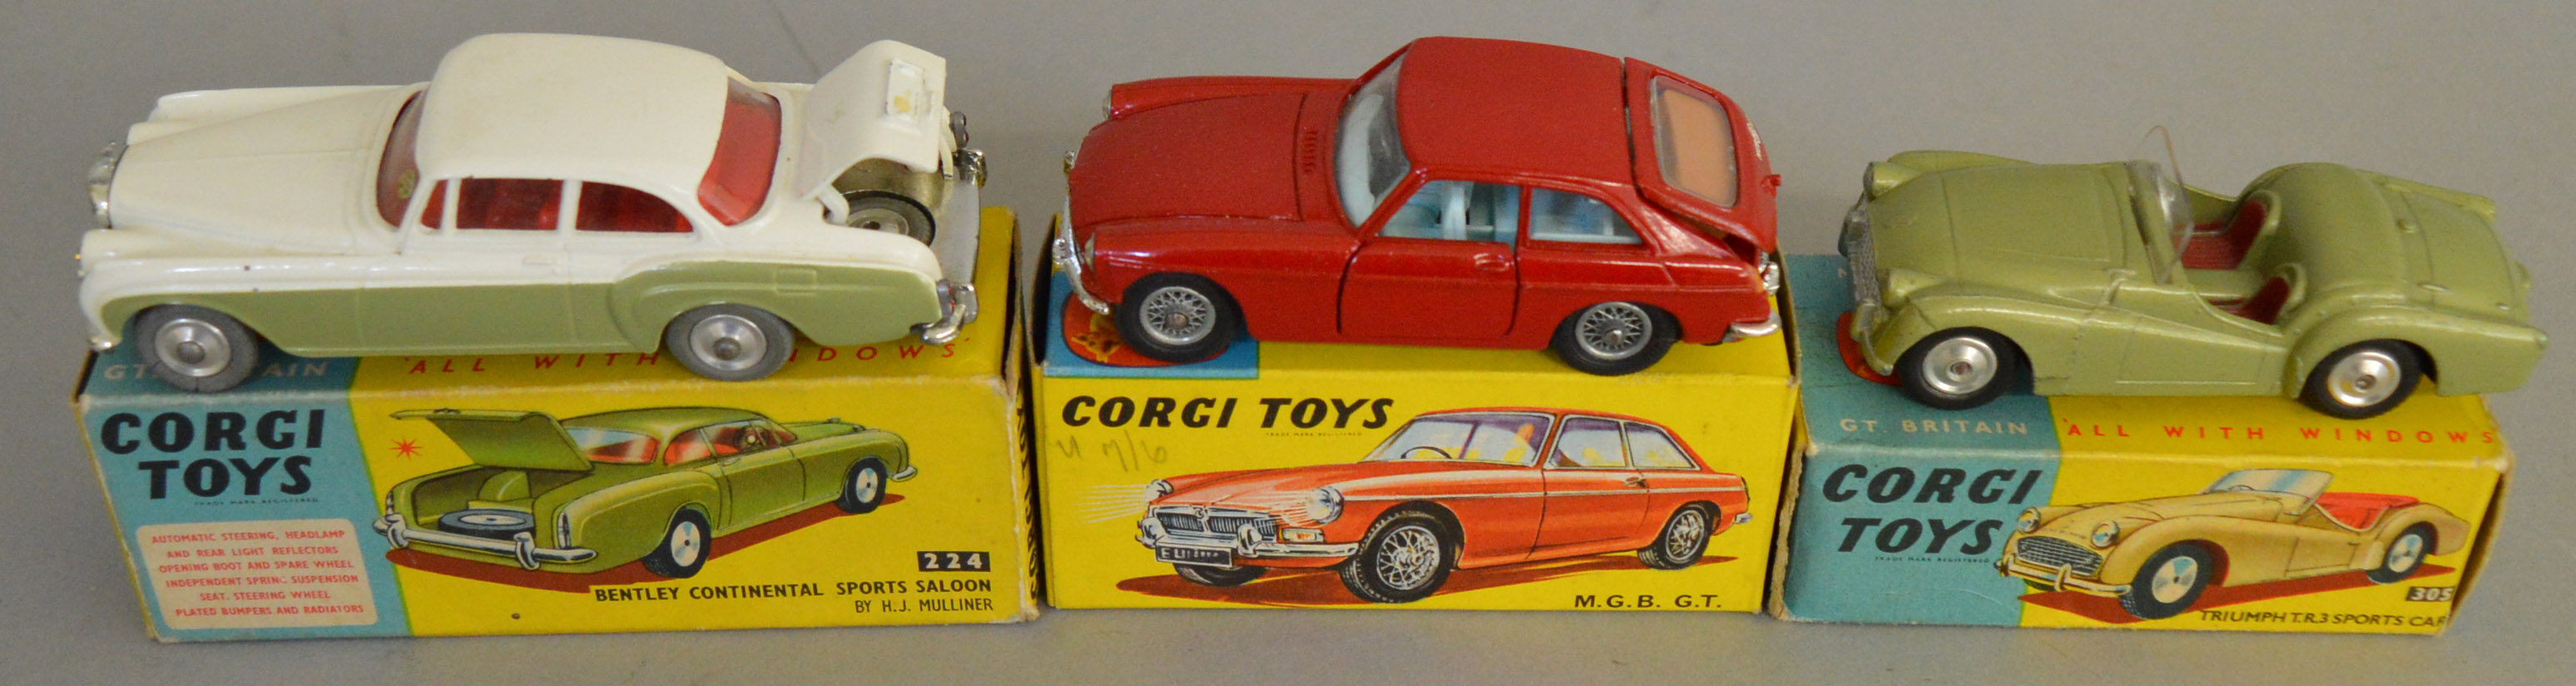 3 Corgi Toys, 224 Bentley Continental, 305 Triumph TR3 Sports Car and 327 MGB GT, all appear G/VG